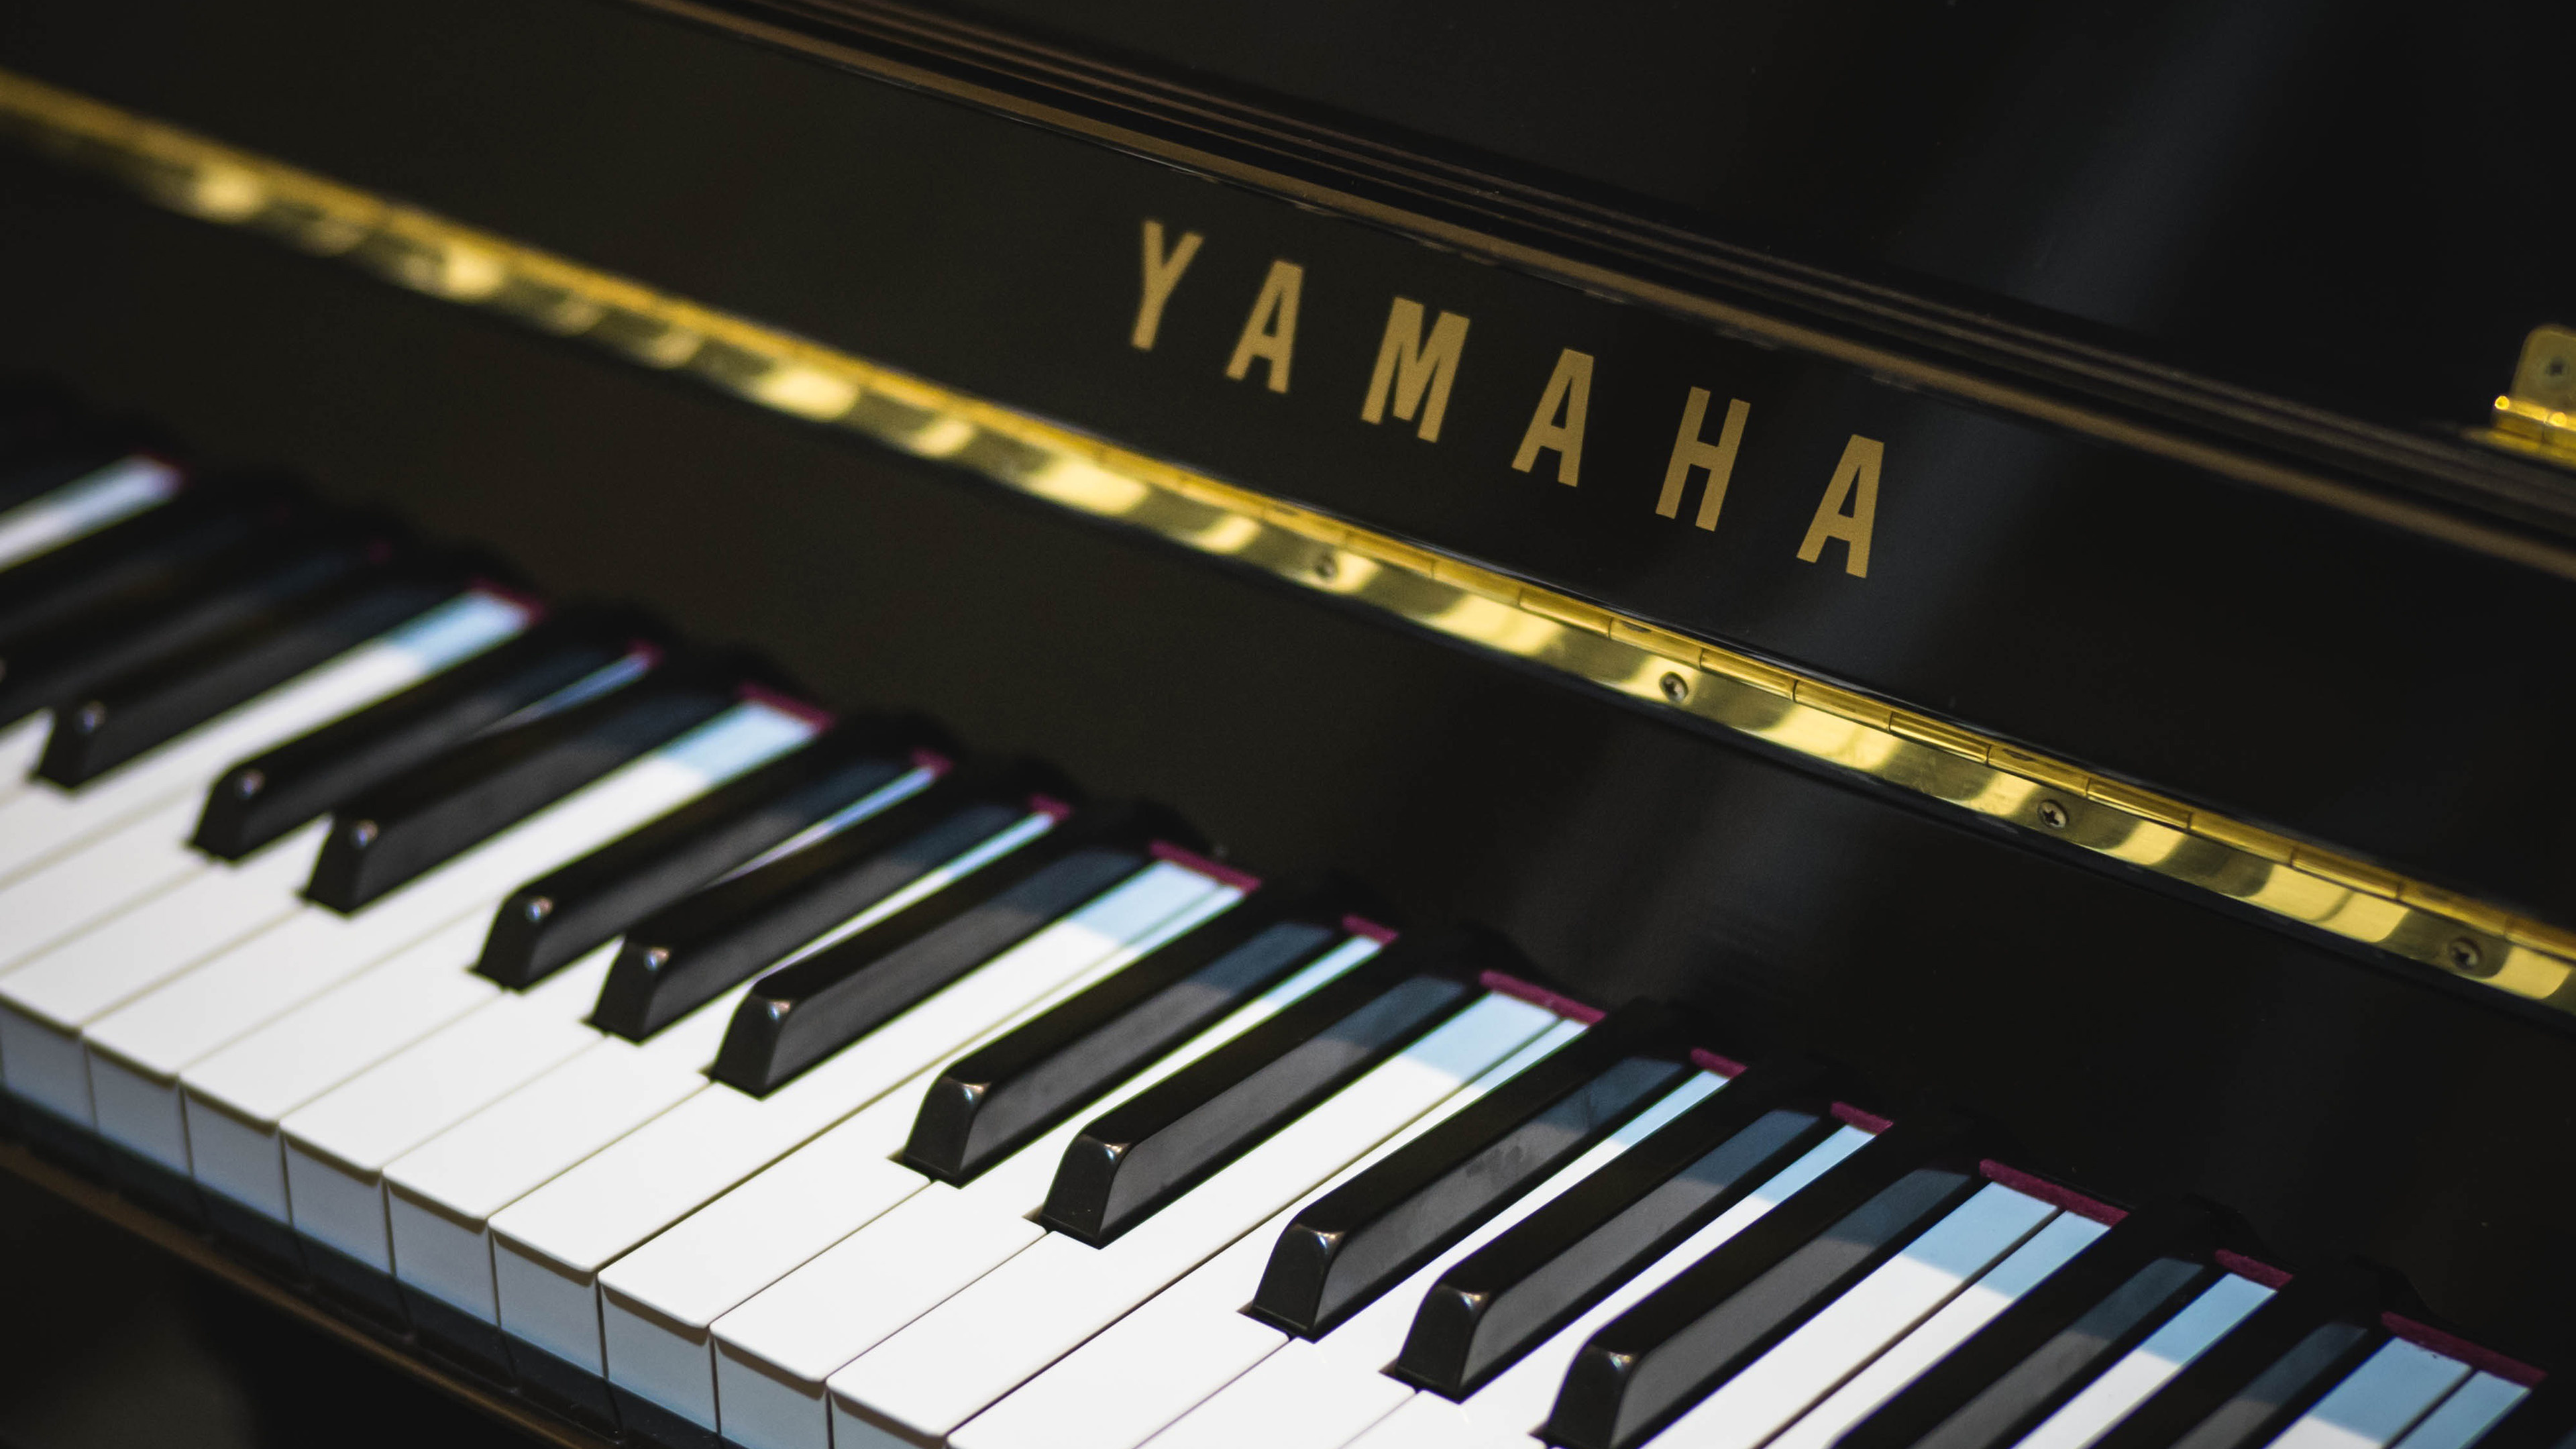 Piano: Yamaha, Keyboard Musical Instrument, Spruce Keys. 3840x2160 4K Wallpaper.